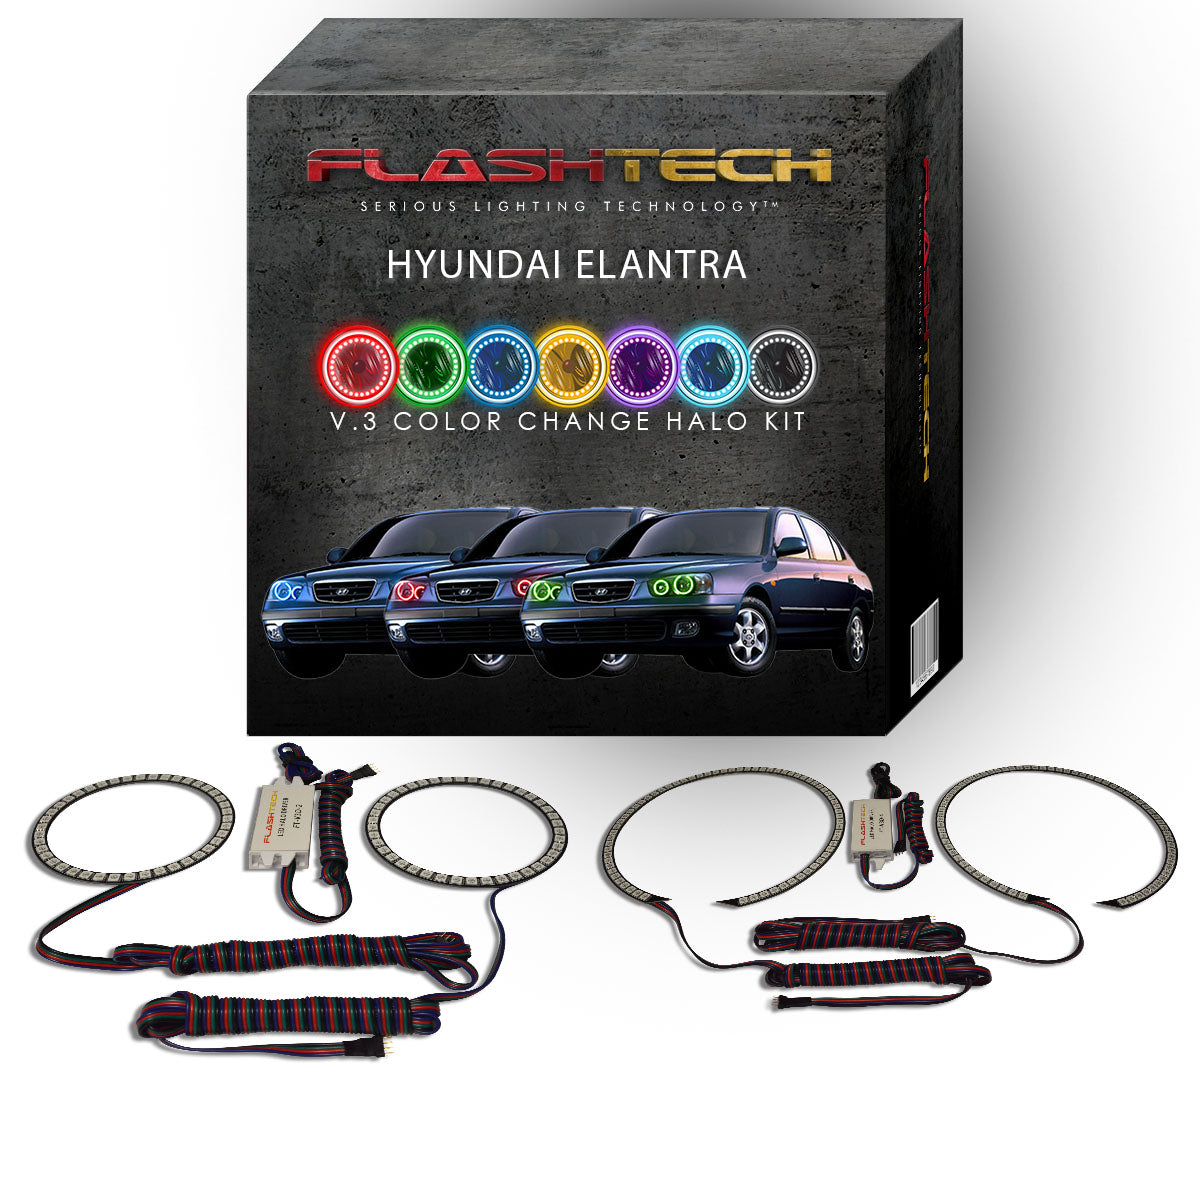 Hyundai-Elantra-2001, 2002, 2003-LED-Halo-Headlights-RGB-No Remote-HY-EL0103-V3H